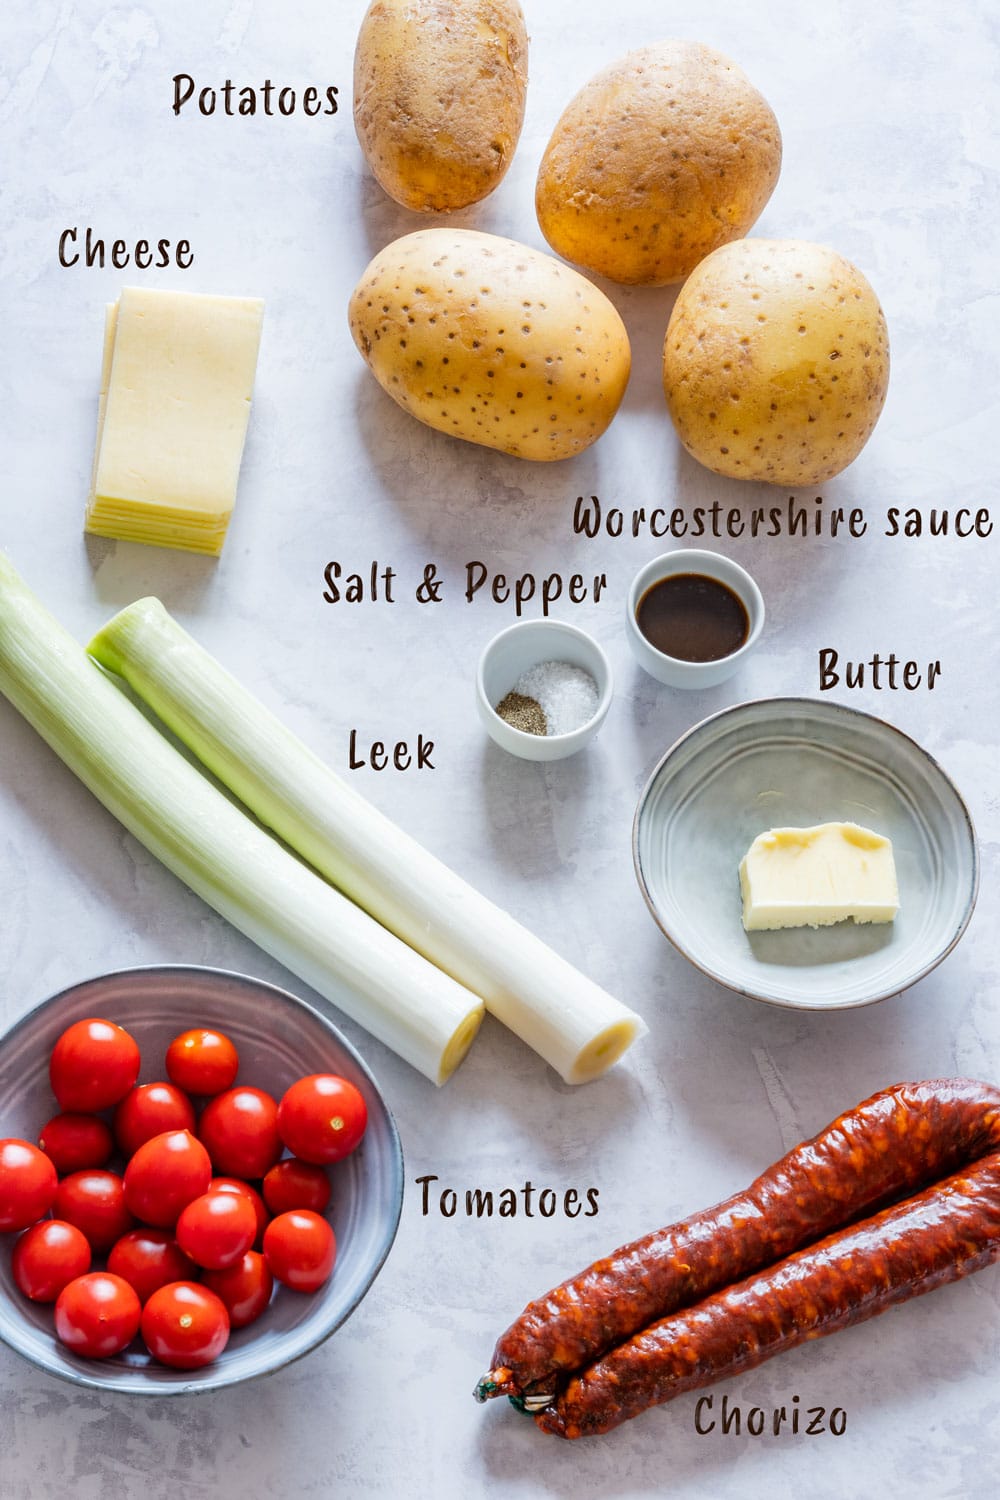 Ingredients of twice baked potatoes - potatoes, tomatoes, leek, chorizo, cheese, worcestershire sauce, salt and pepper.